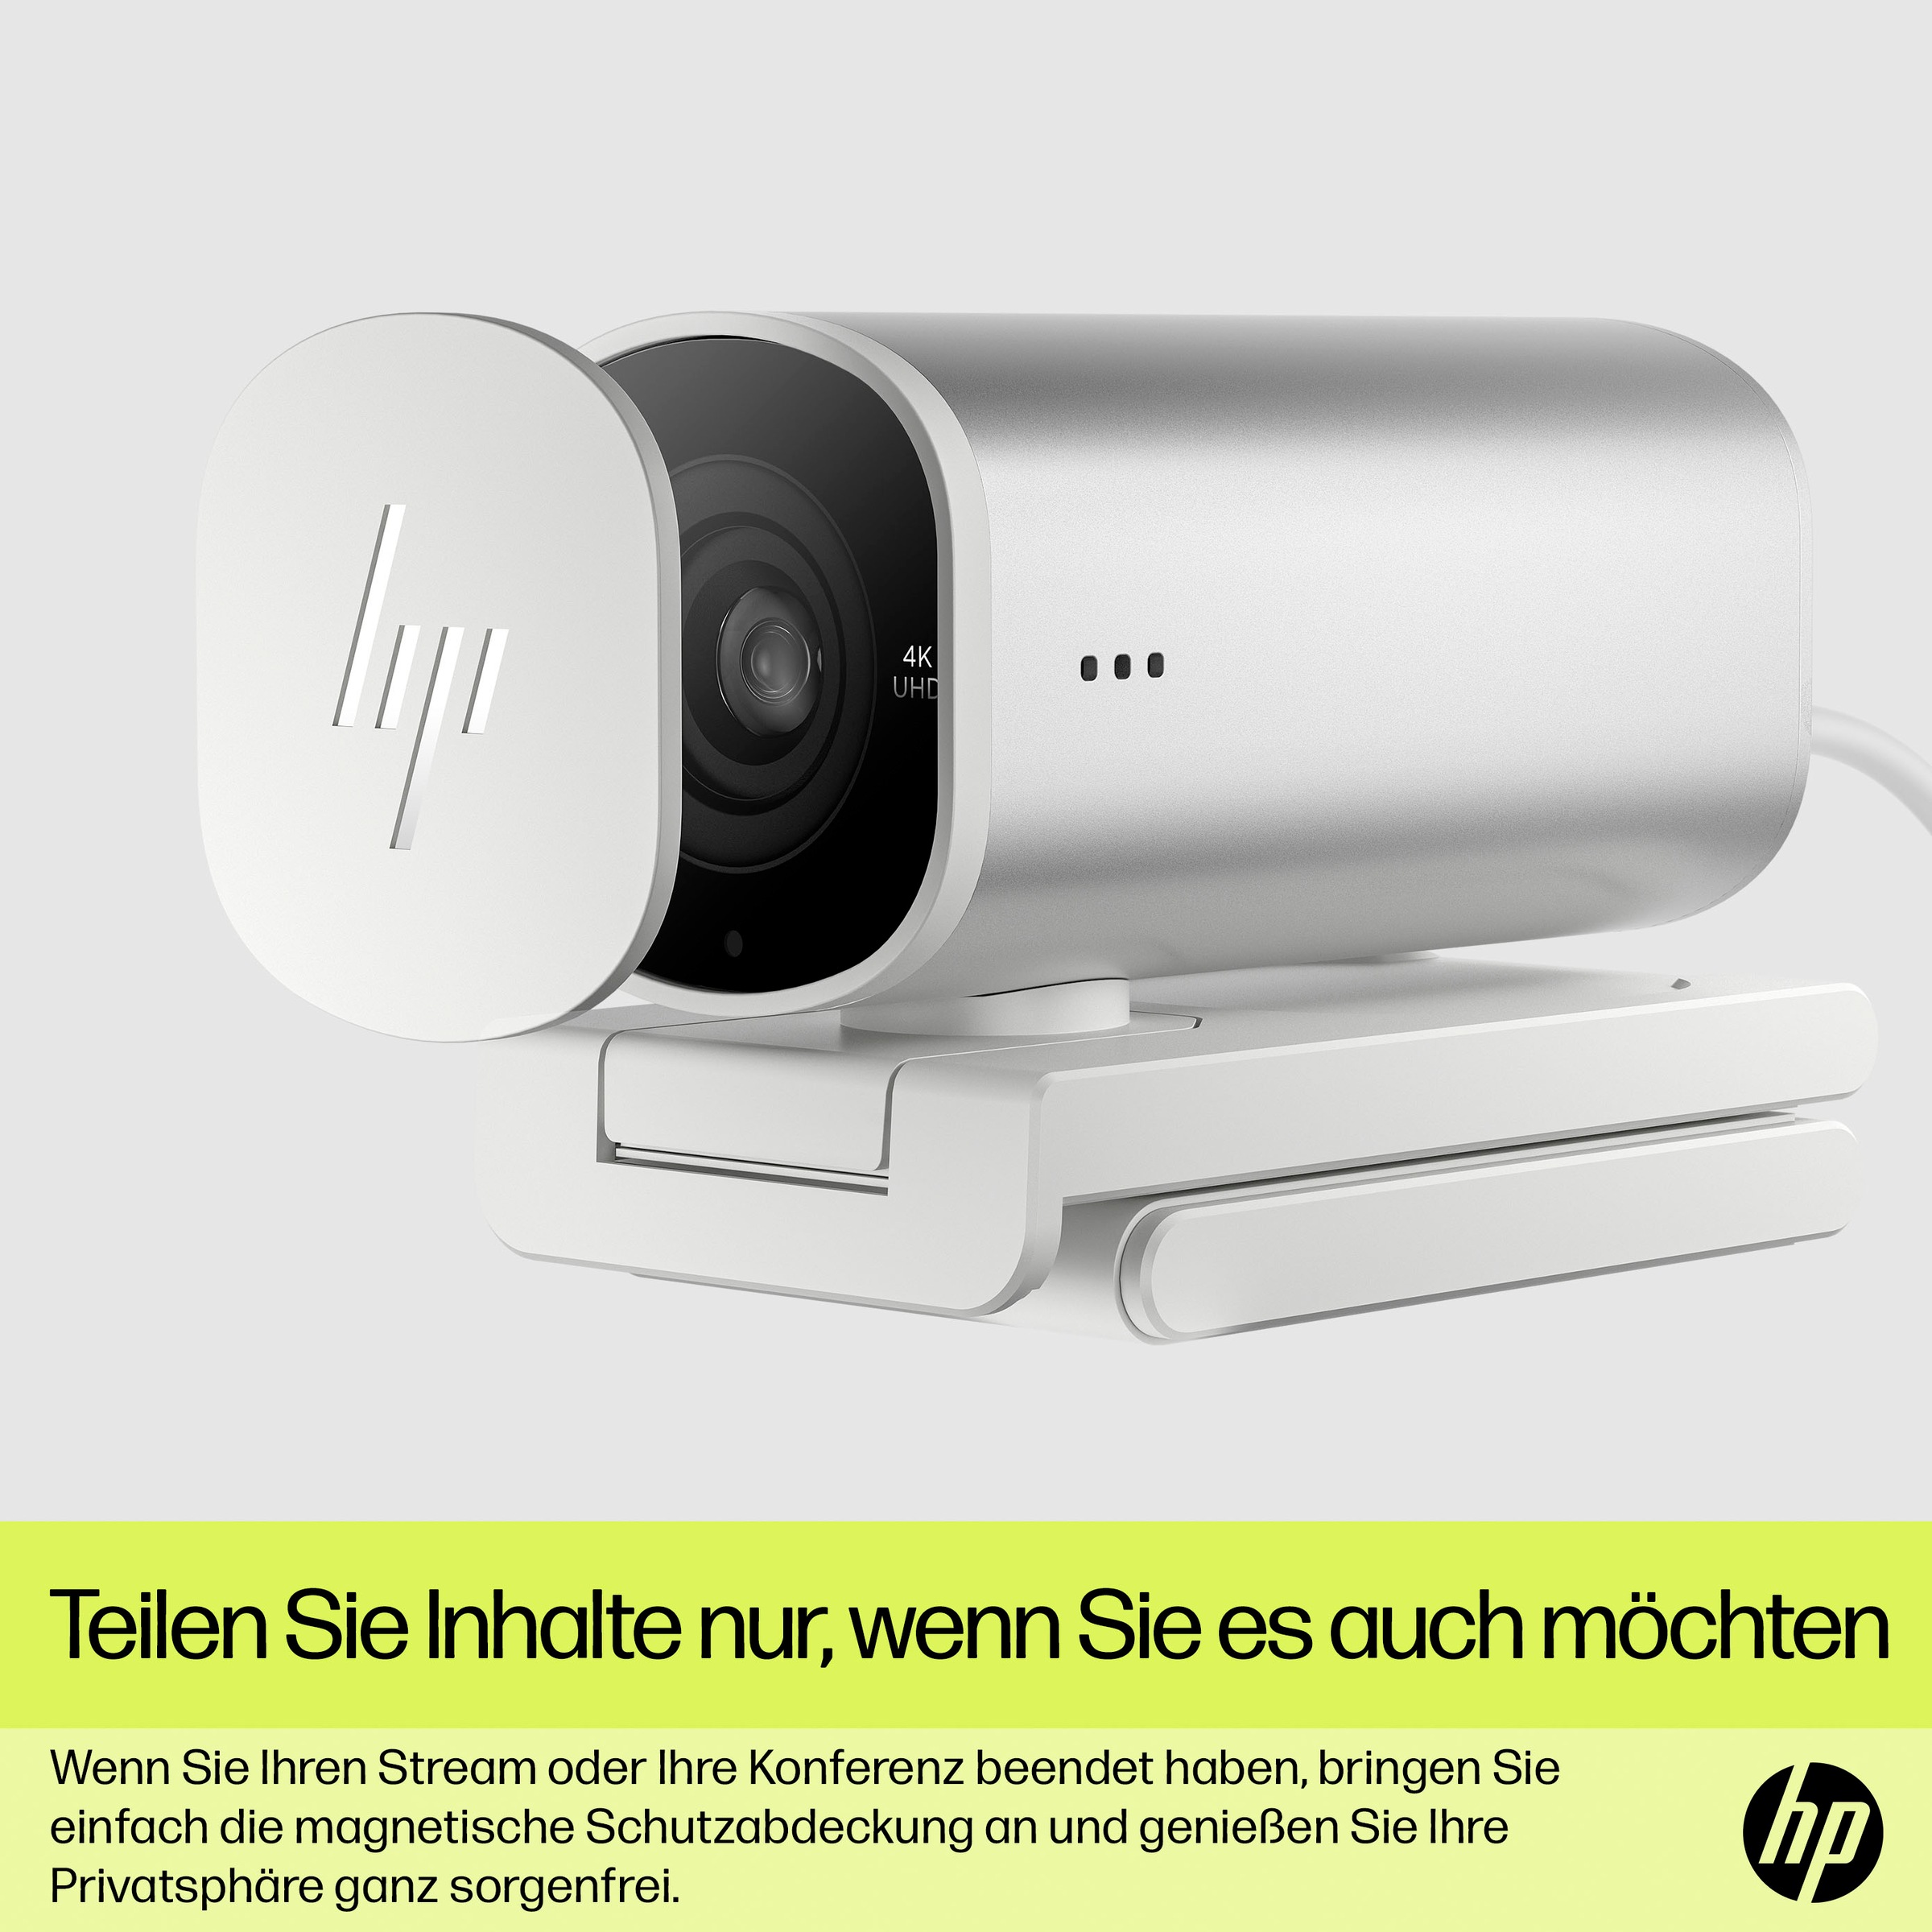 HP Webcam »960 4K«, 4K Ultra HD, 5 fachx opt. Zoom